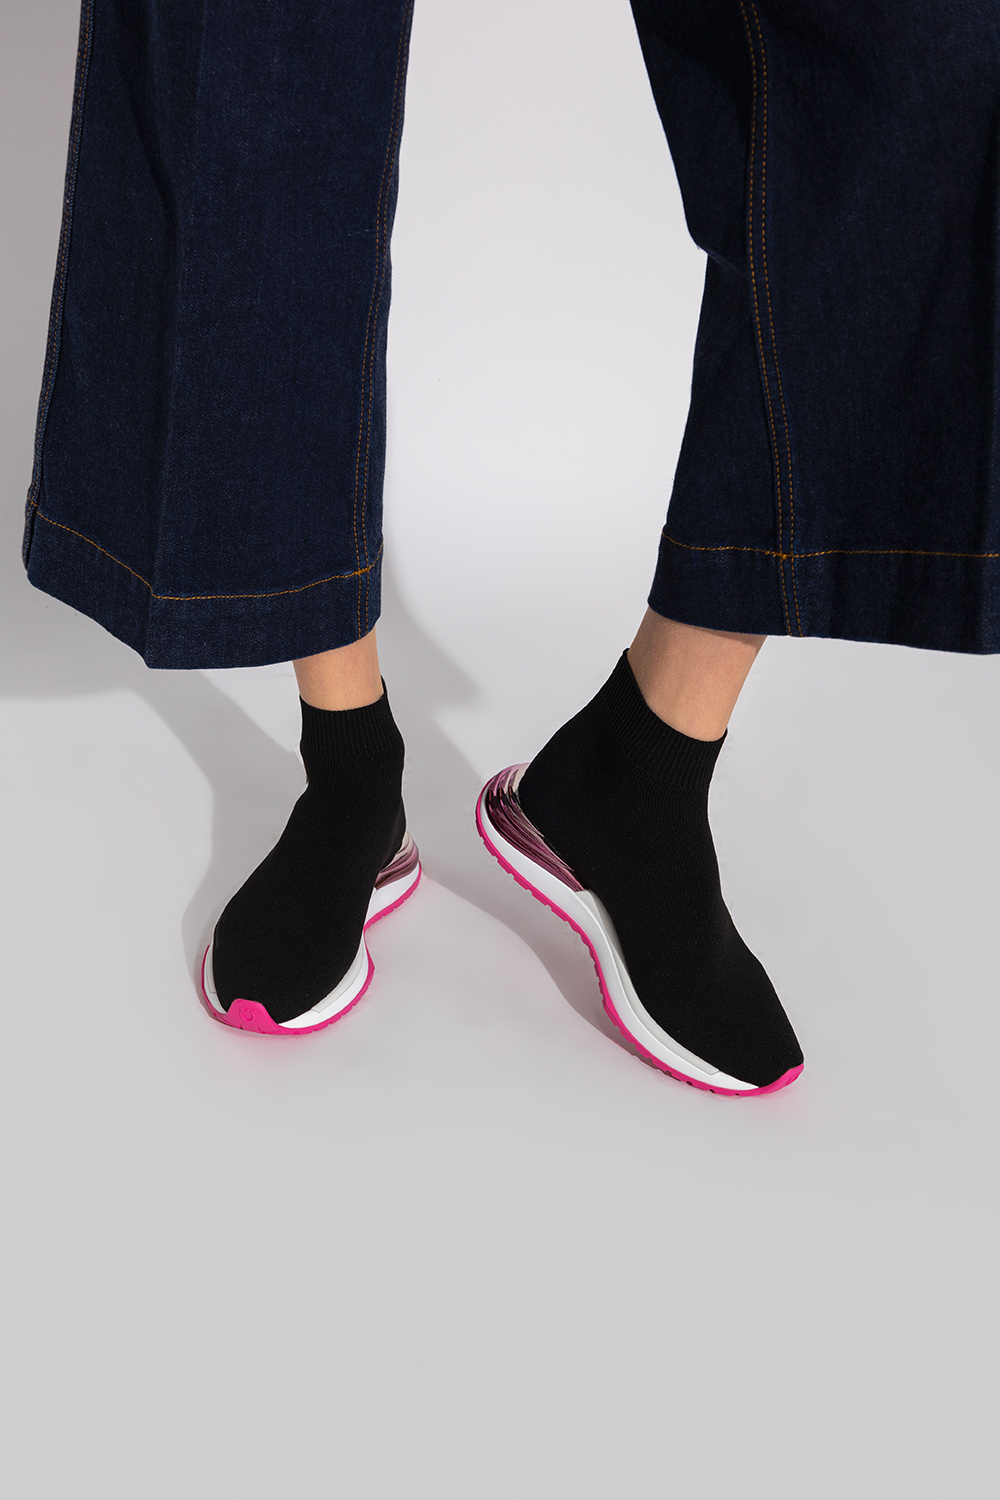 Salvatore Ferragamo ‘Ninette’ sneakers with sock